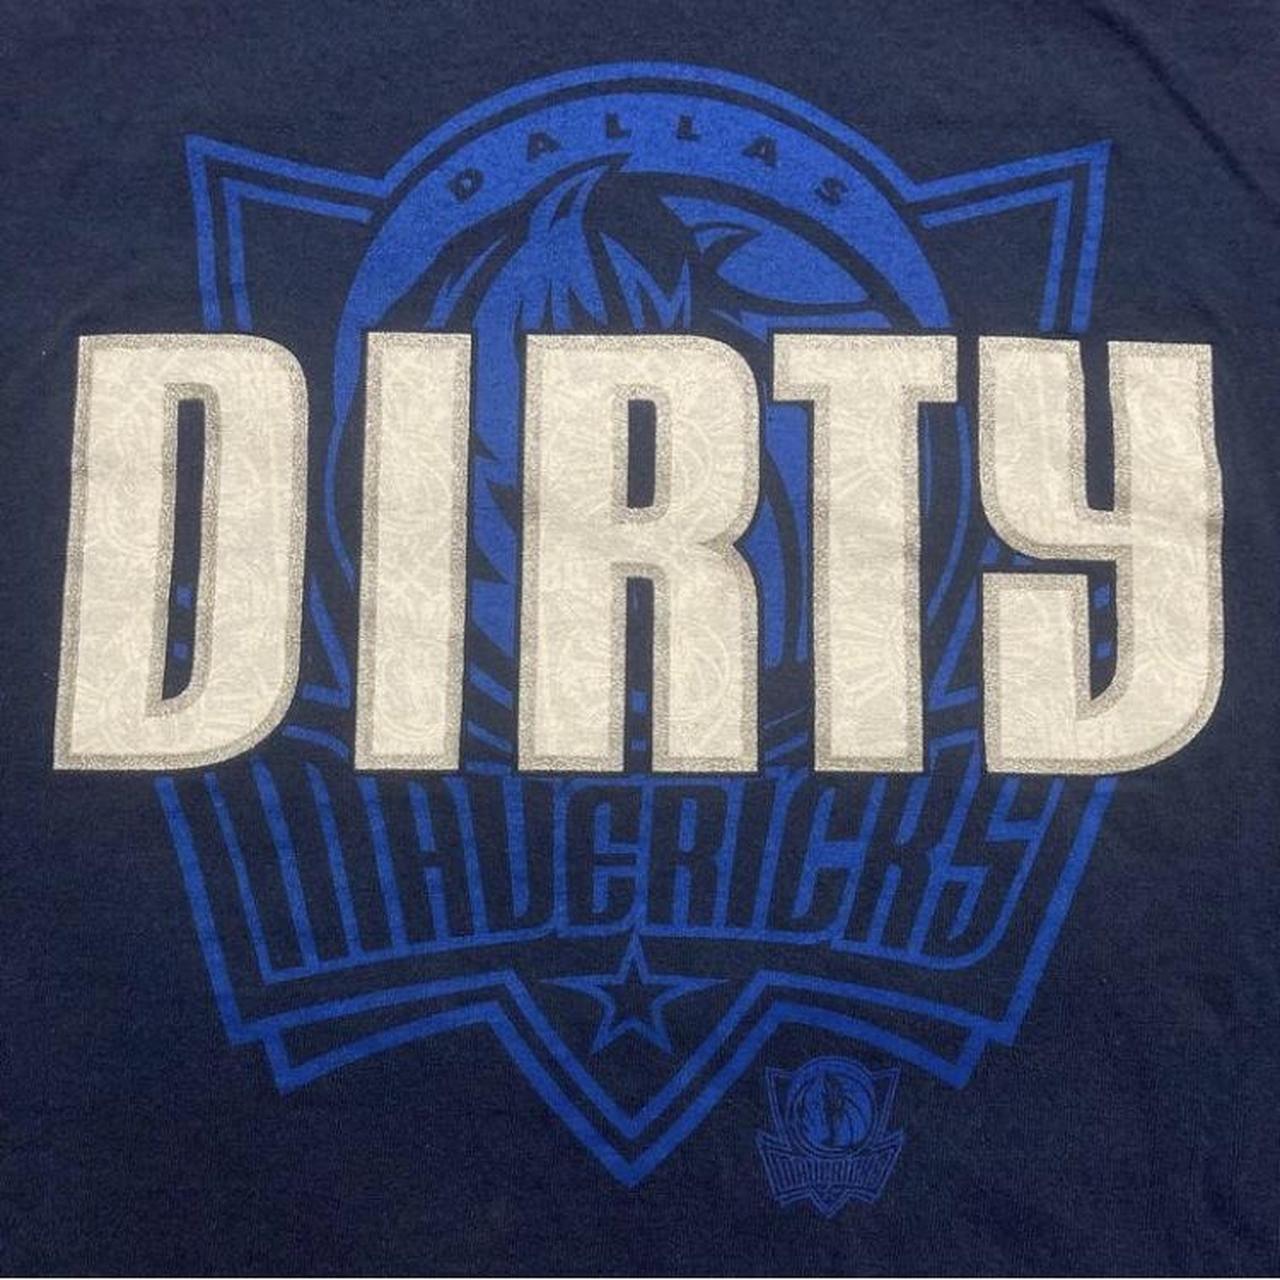 Dirk Nowitzki Dallas mavericks jersey size youth - Depop